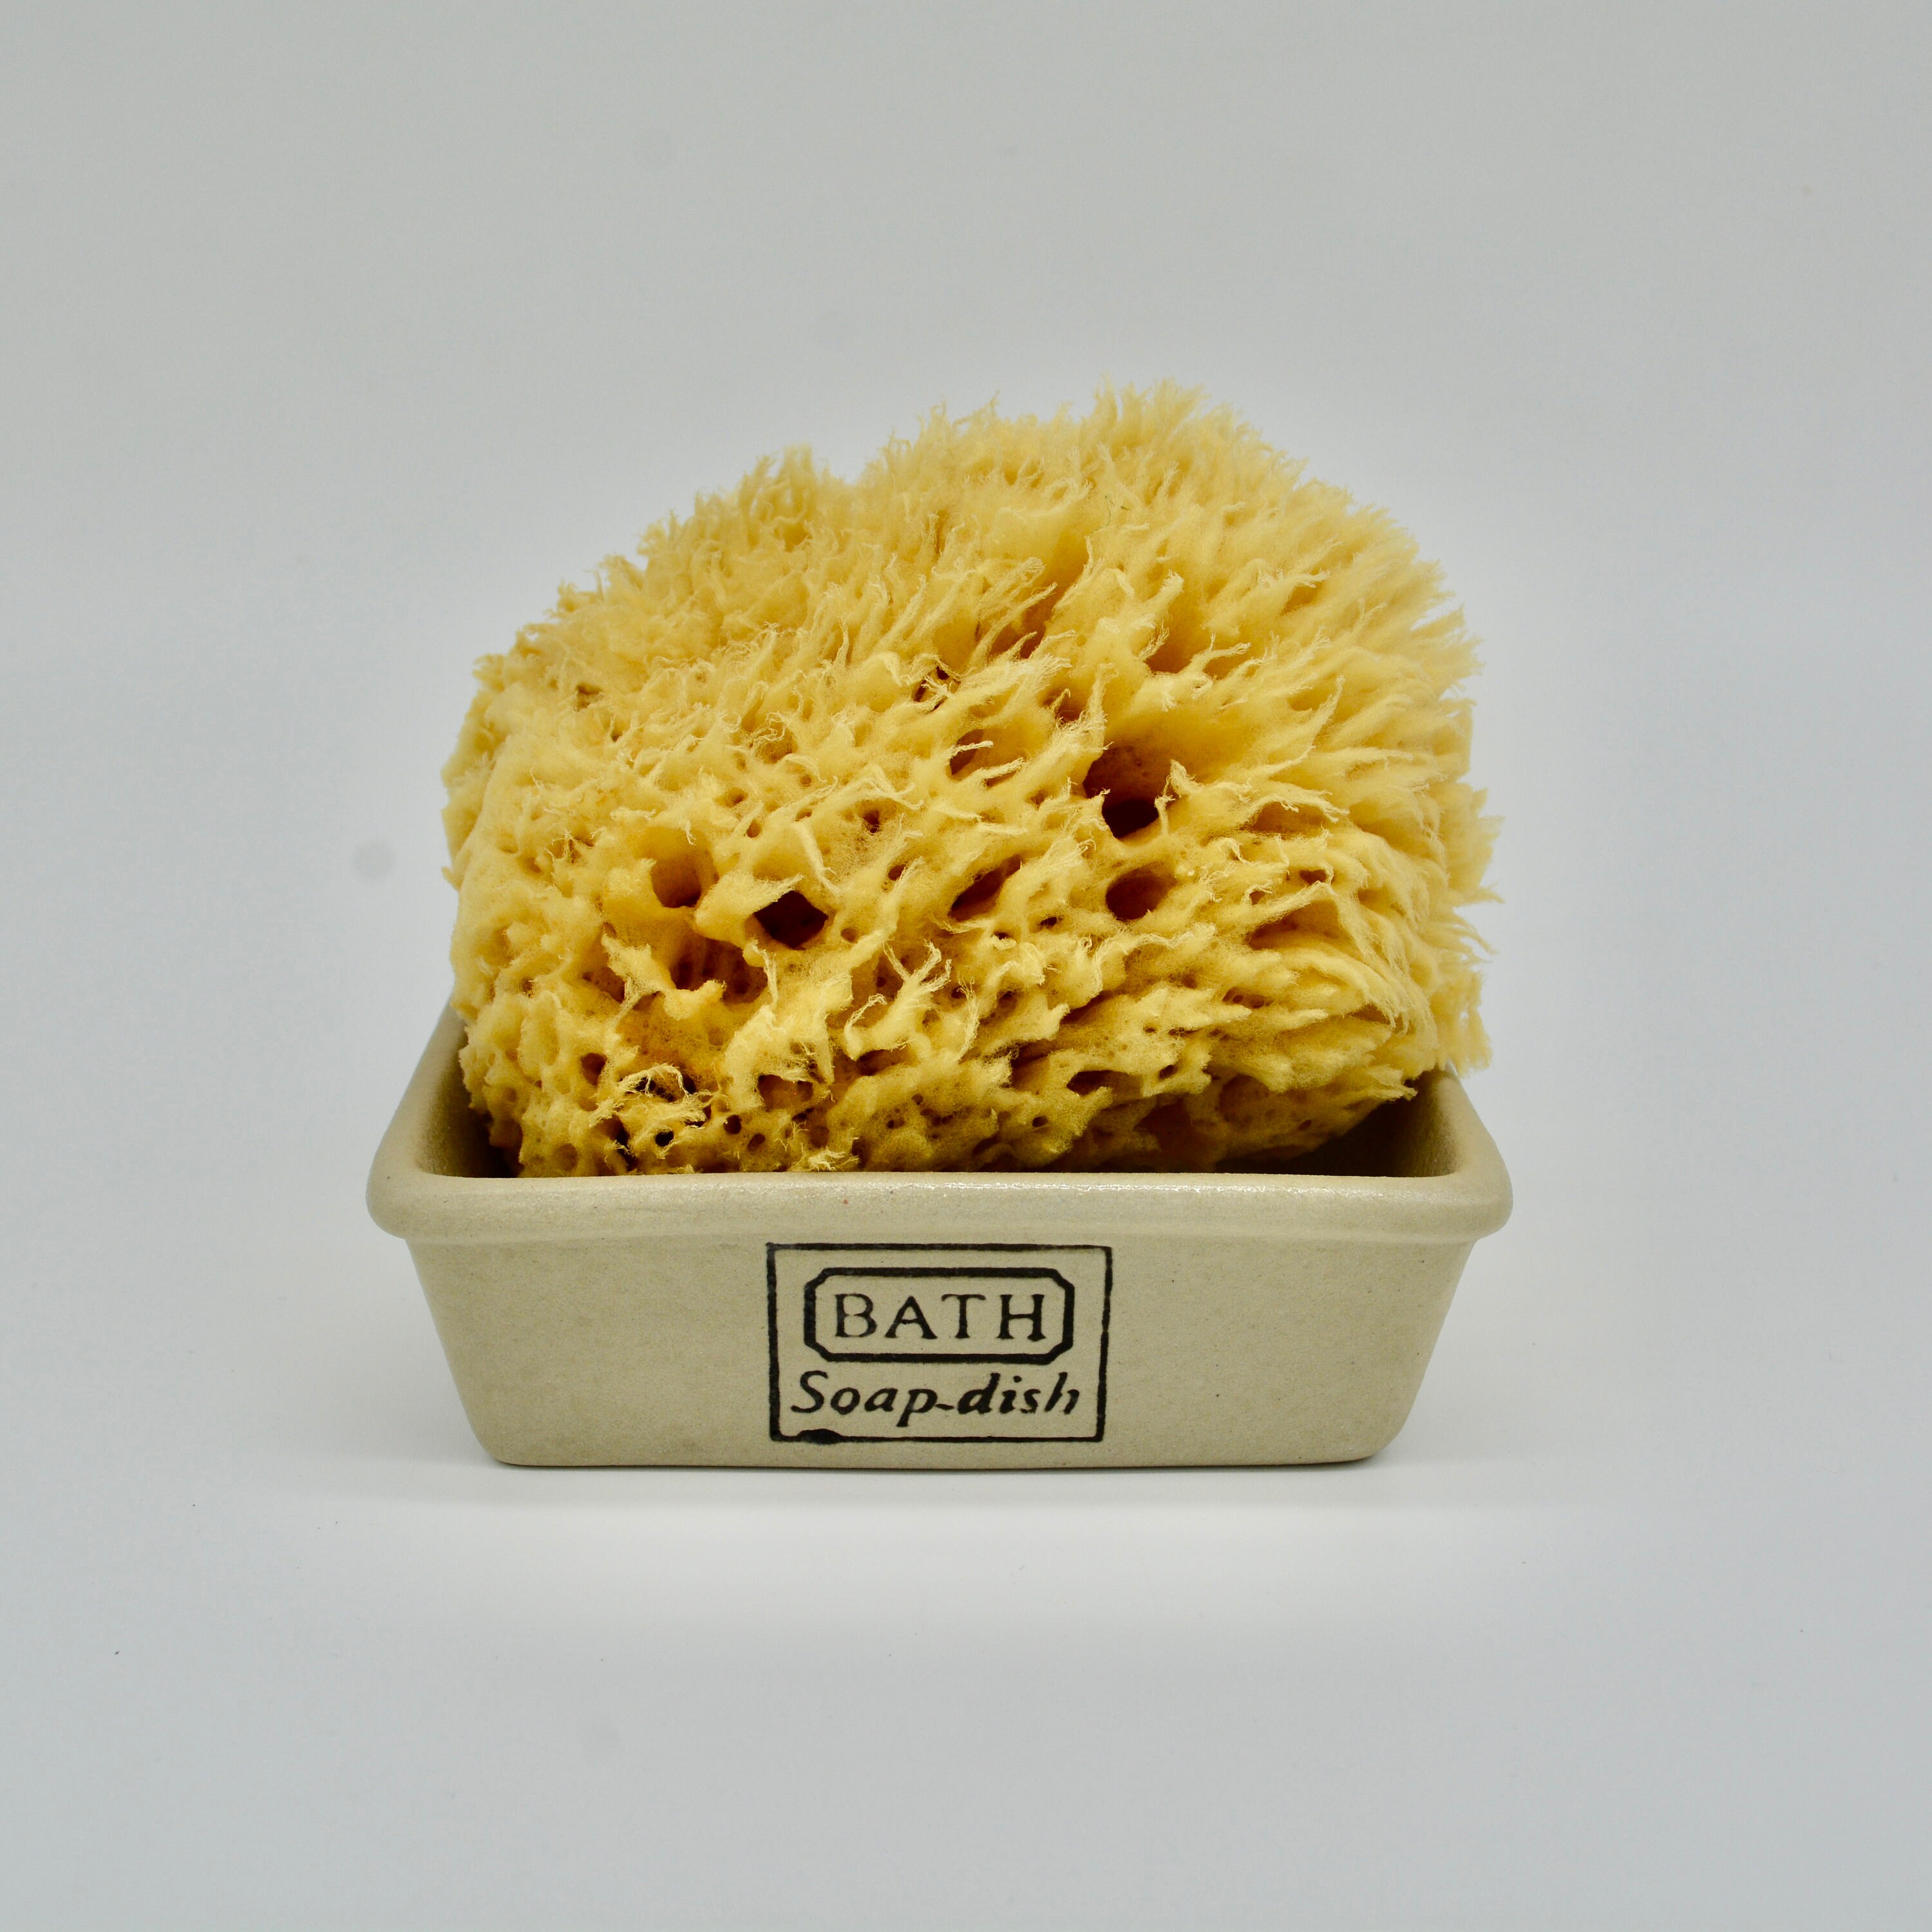 Key West & Bahamian Prime Wool Bath Sea Sponges